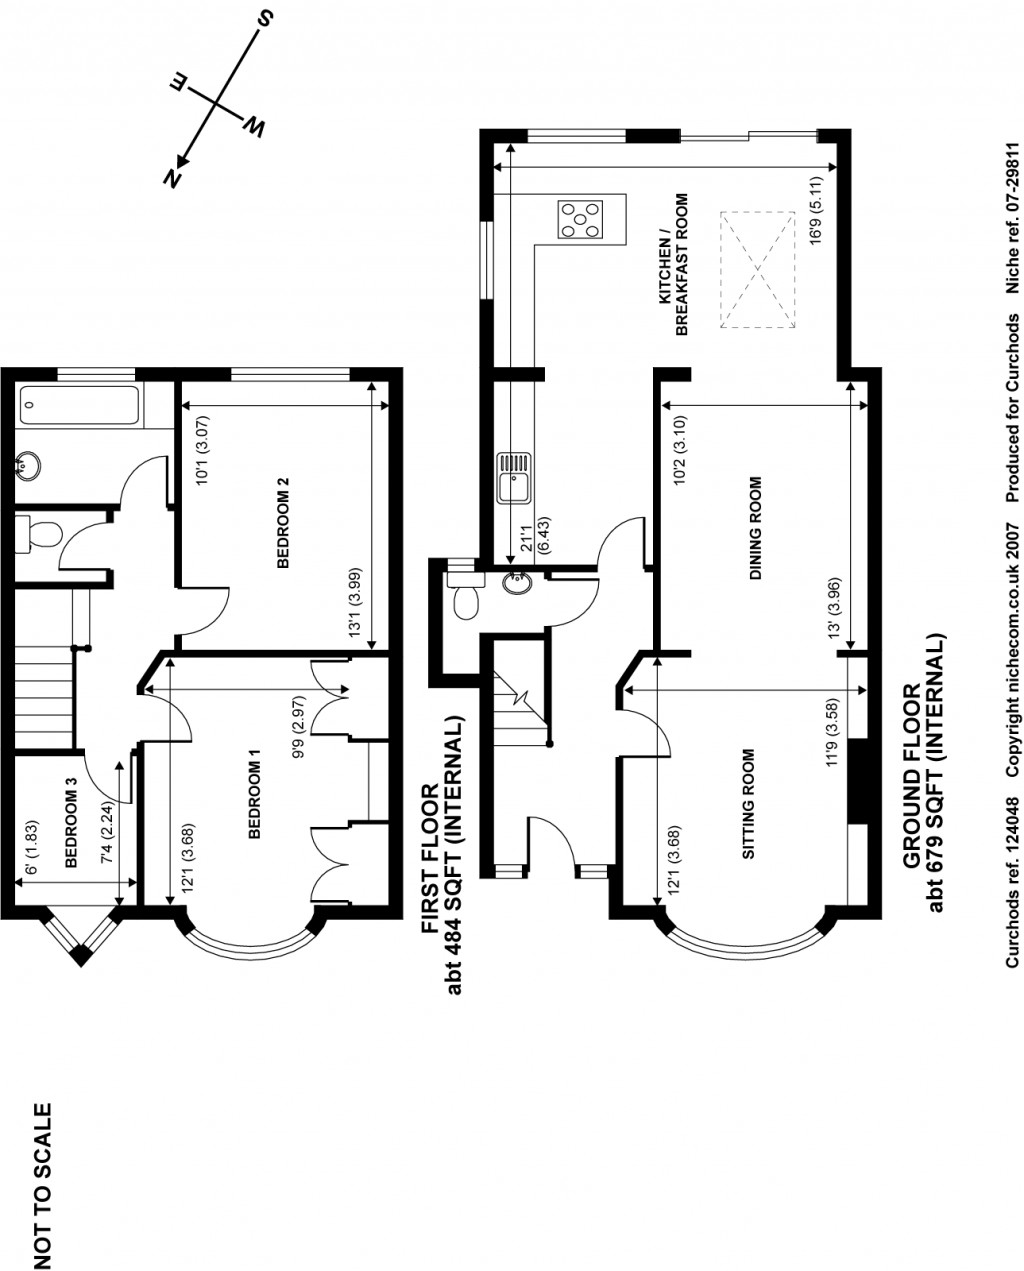 Floorplans For Dudley Road, Walton-On-Thames, KT12